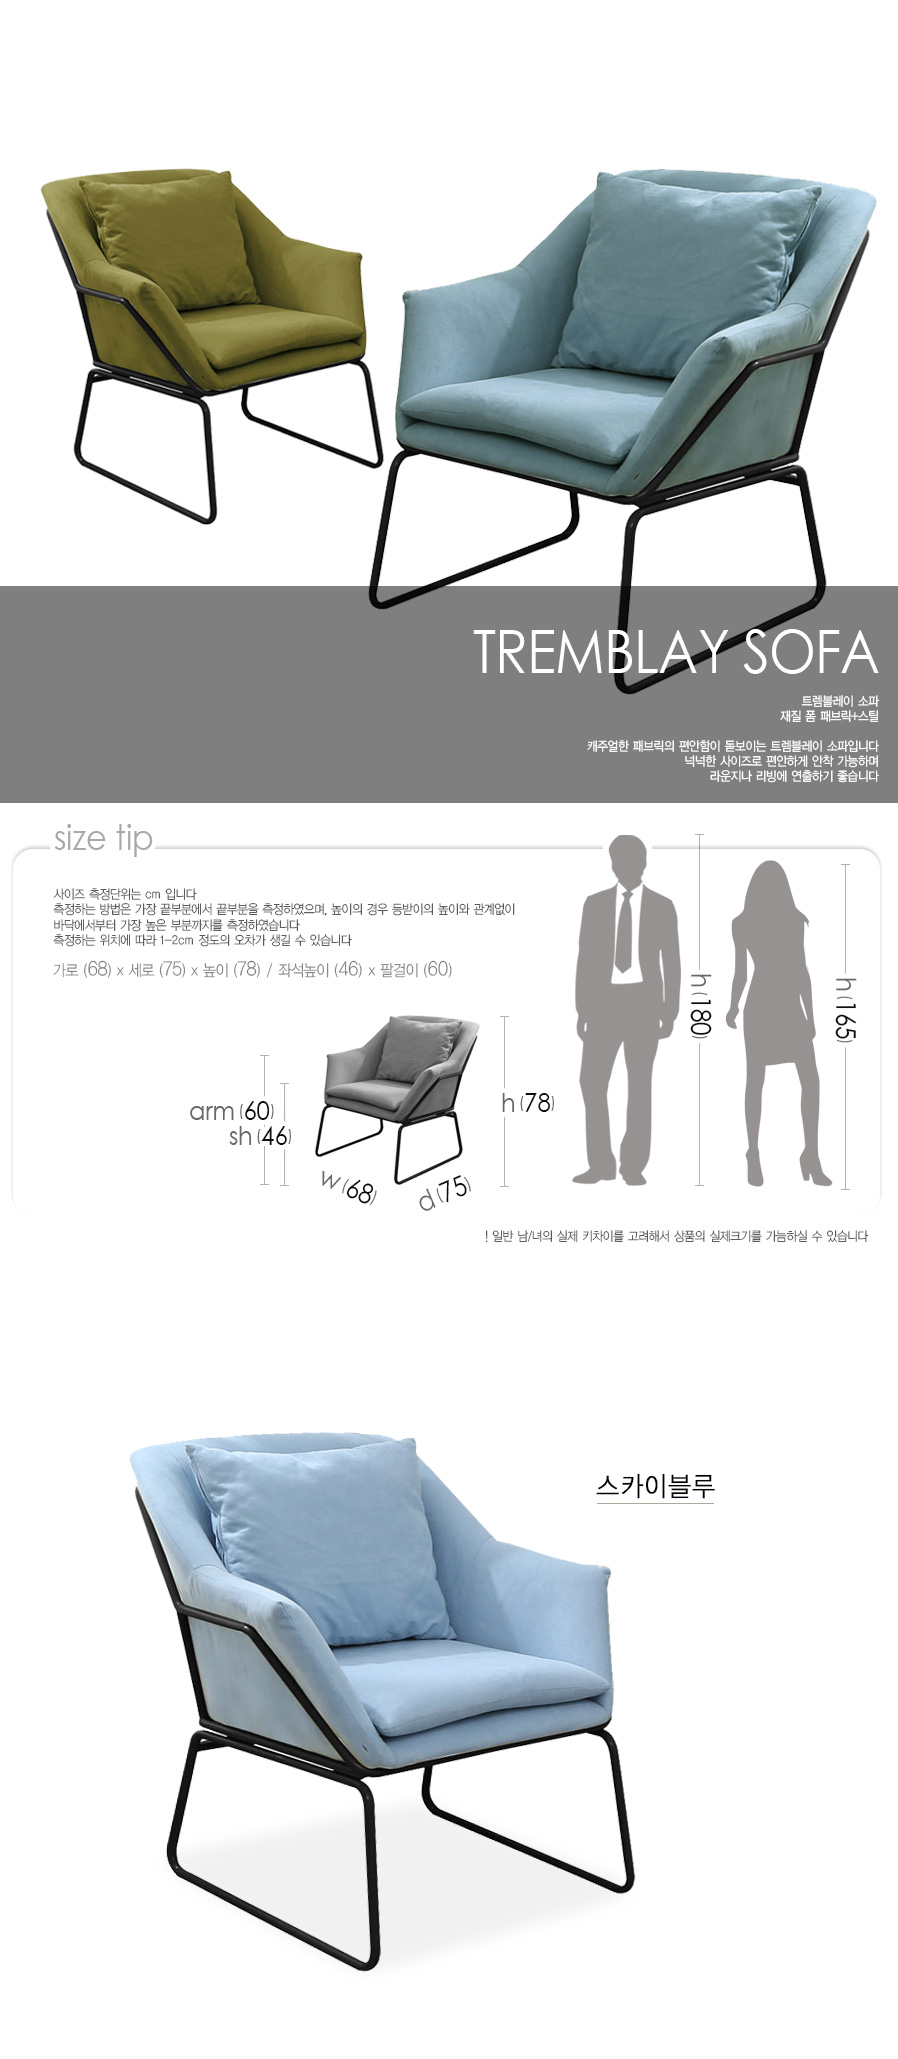 tremblay-sofa_01.jpg